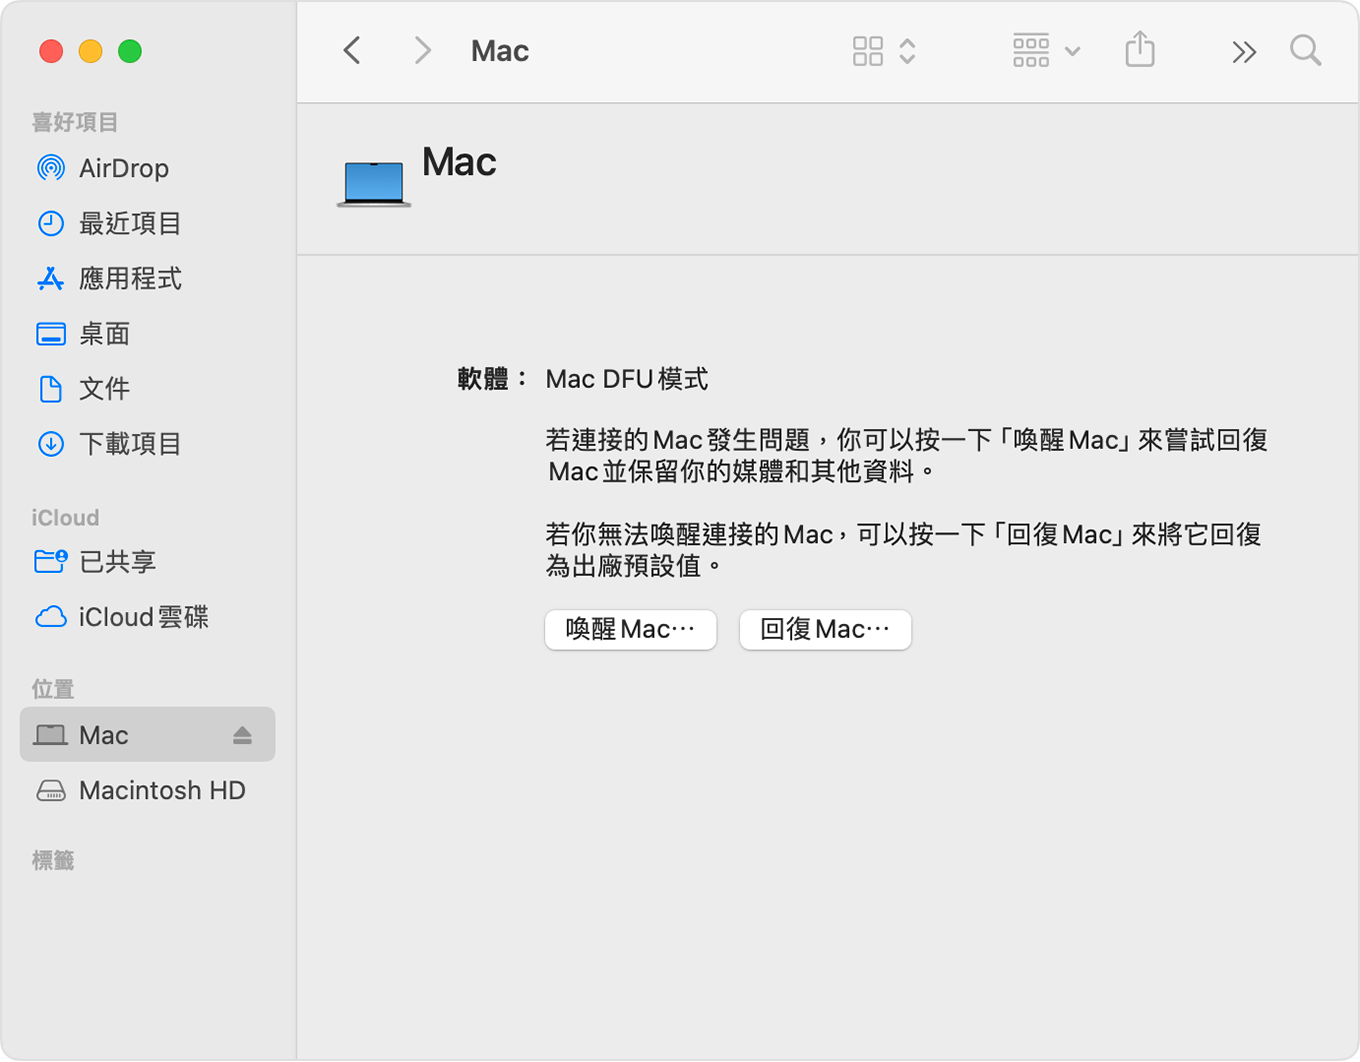 Finder 視窗顯示側邊欄中已選取「Mac」